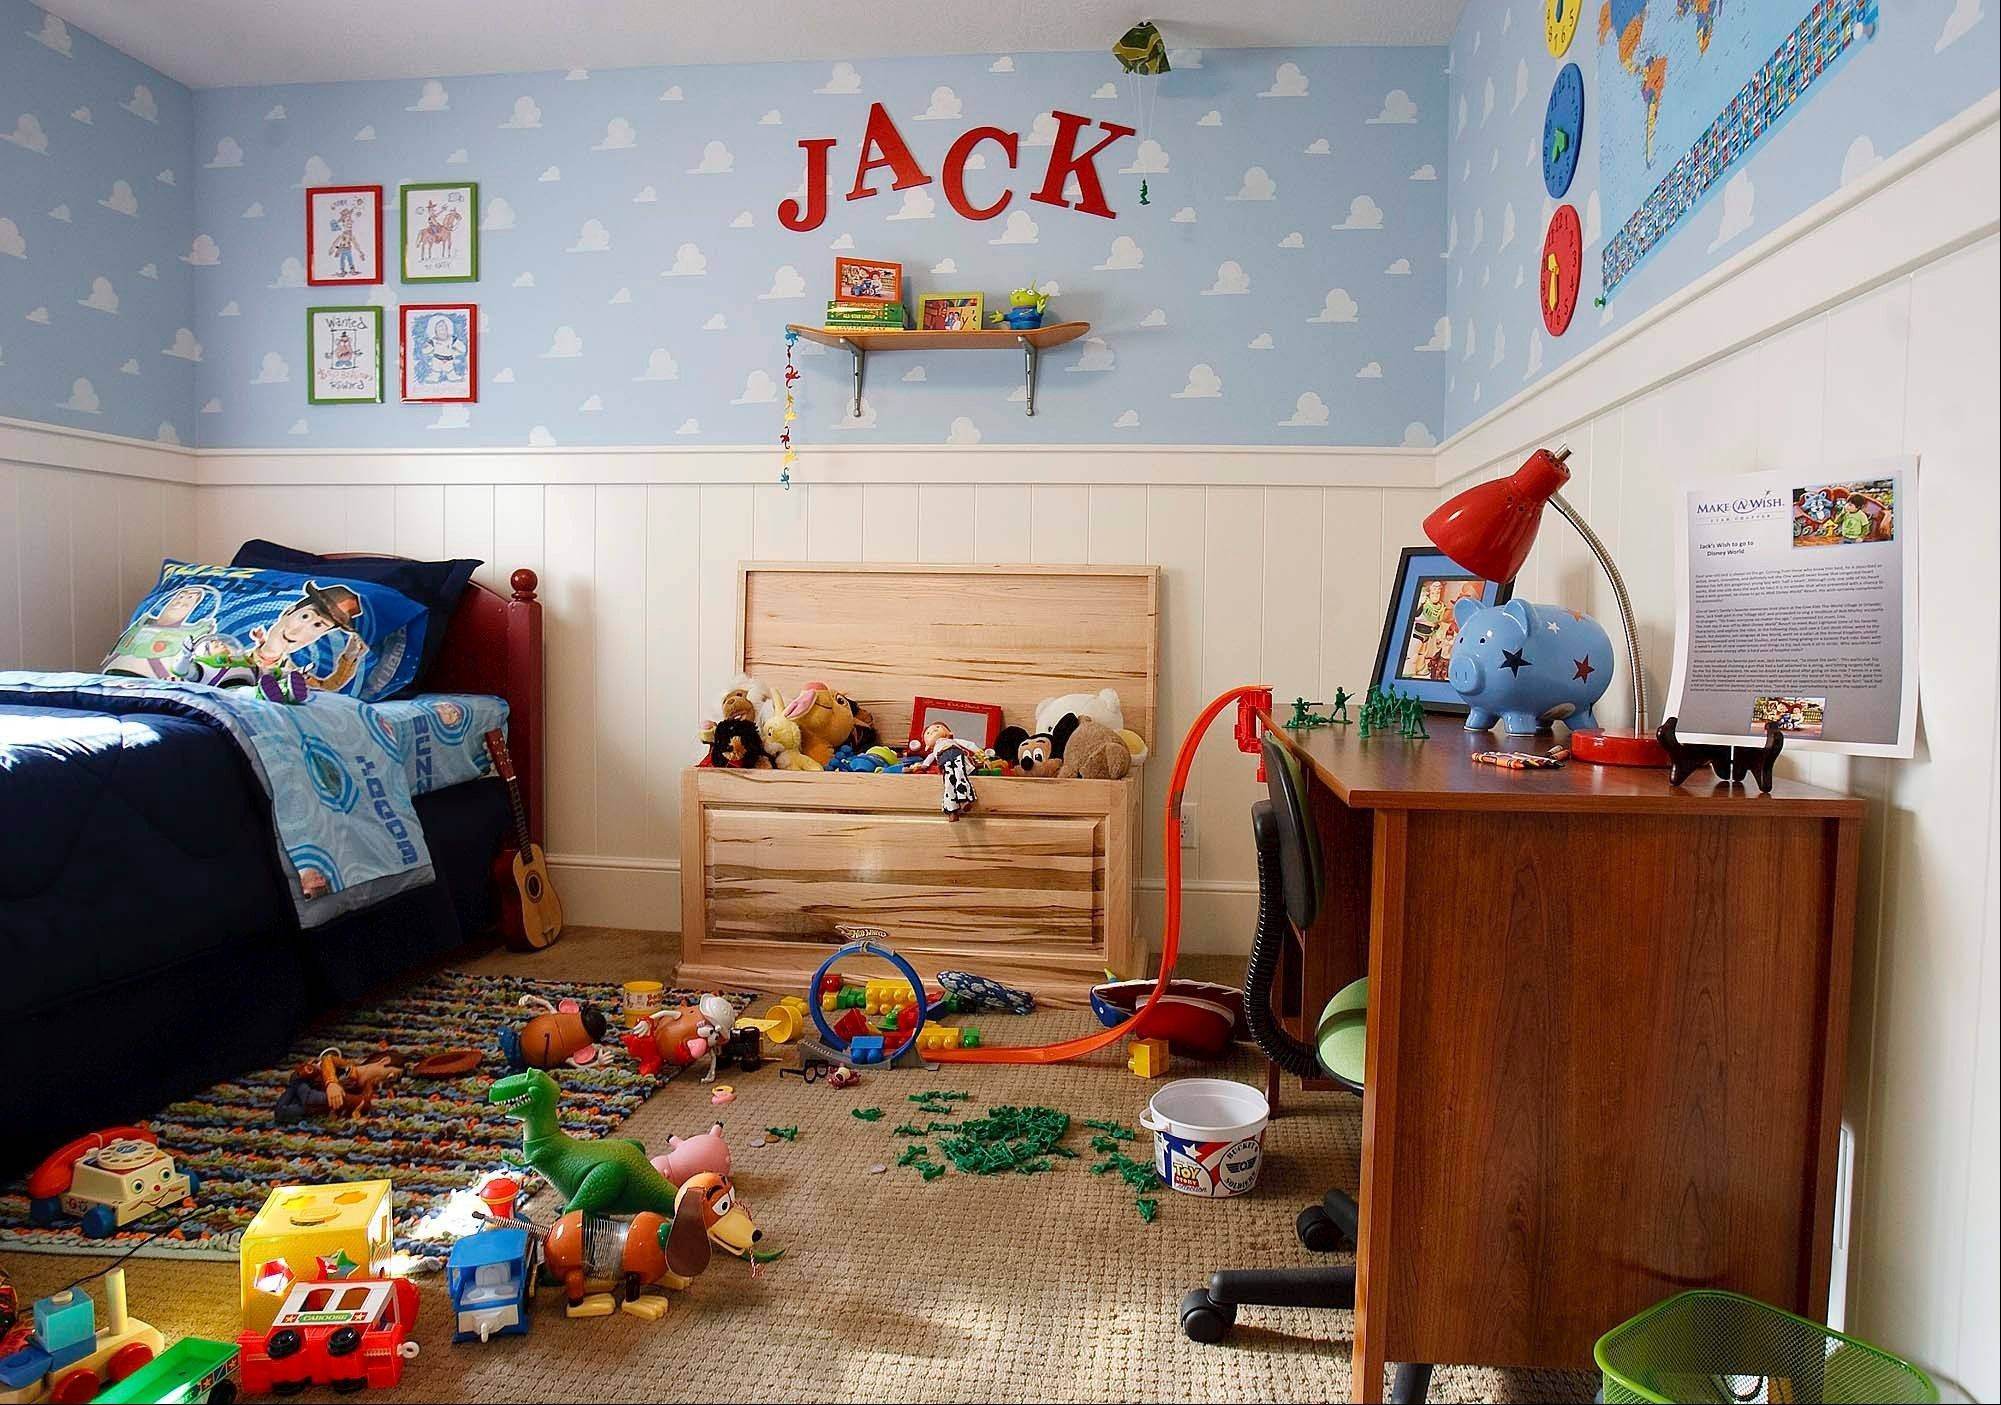 Bedroom toys. Комната с игрушками. Детская комната с игрушками. Интерьер детской комнаты с игрушками. Ребенок в комнате с игрушками.